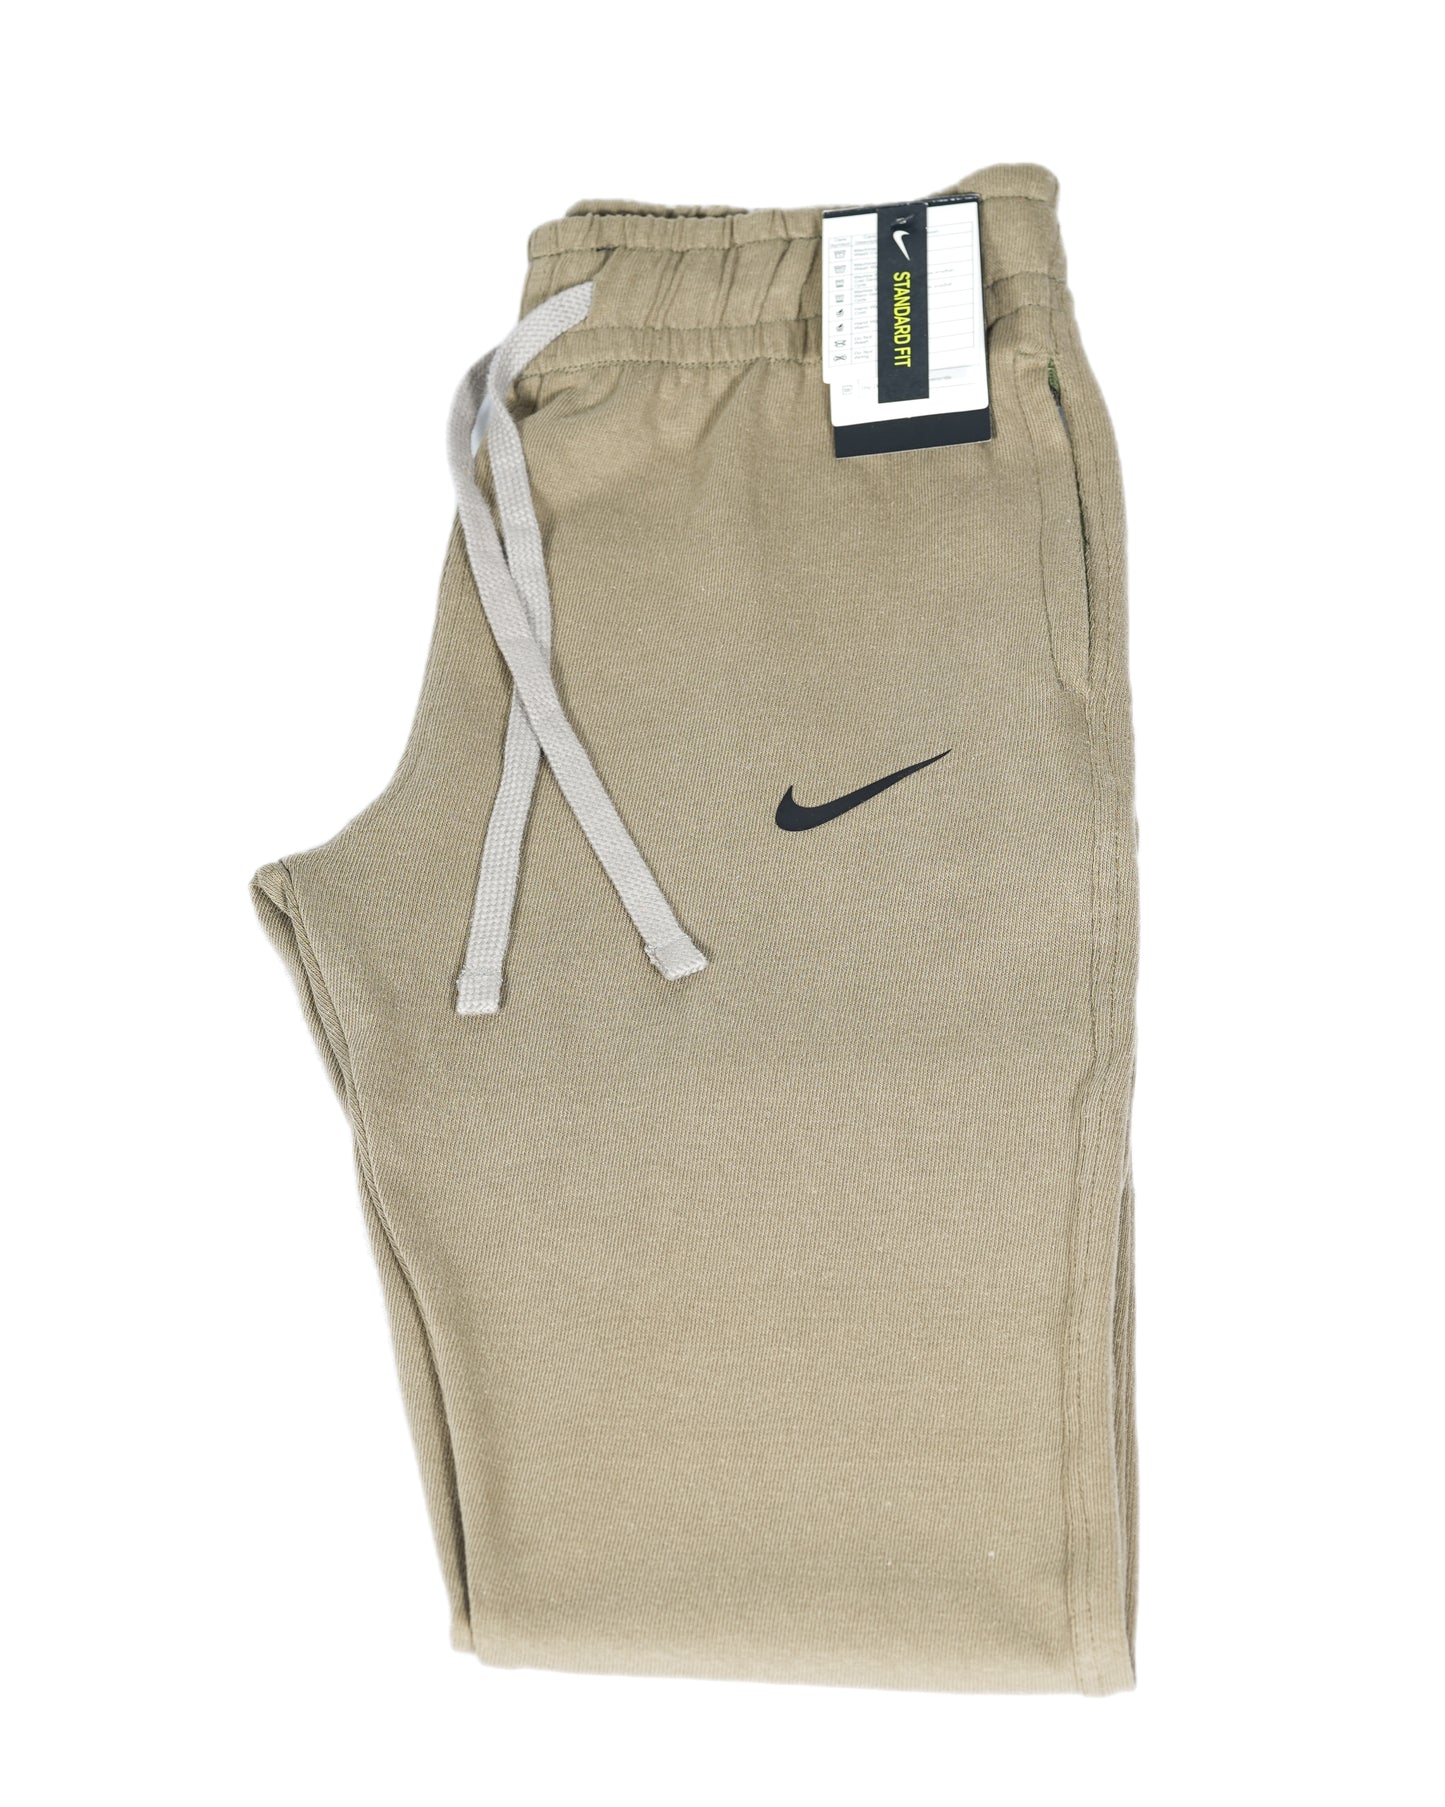 Nike STANDARD FIT PANT -Beige